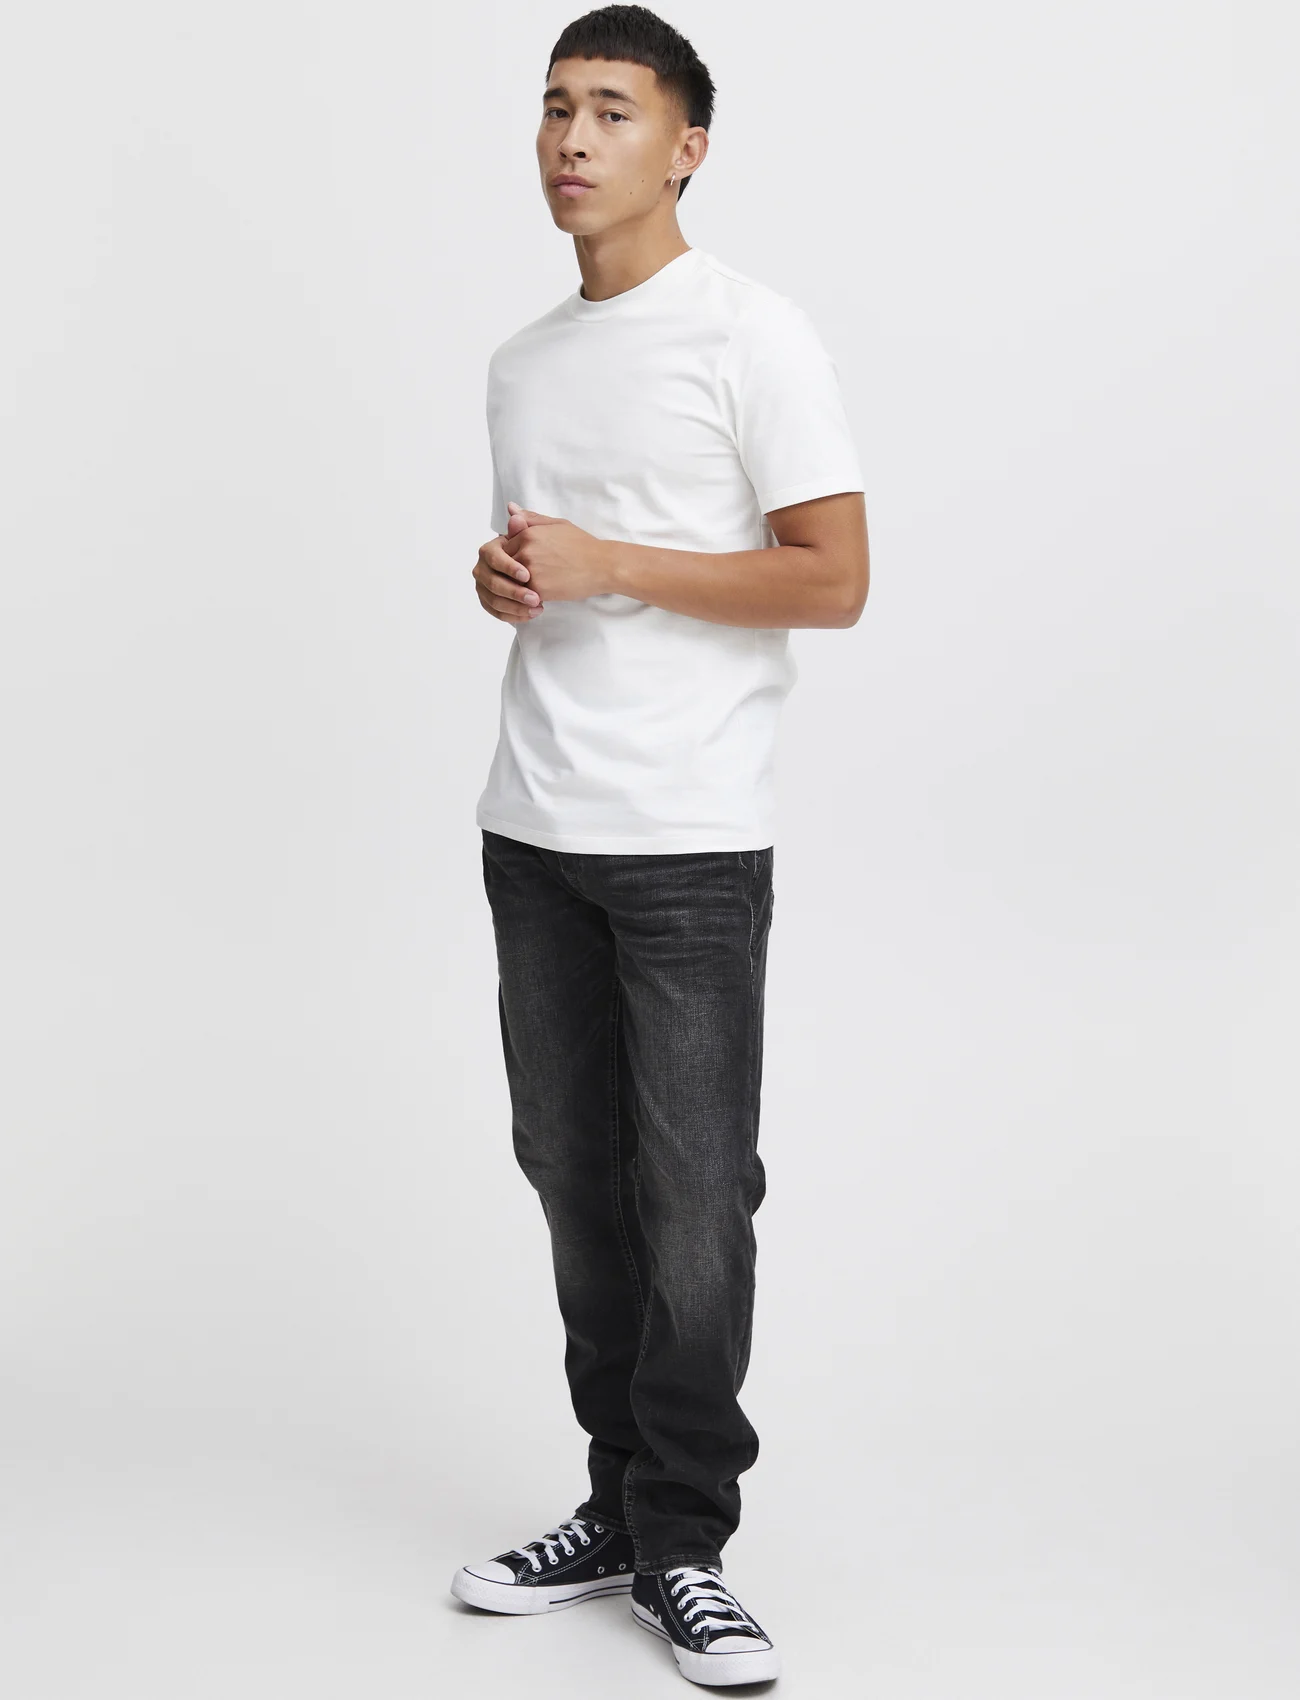 Blend - Twister fit Multiflex - NOOS - slim jeans - denim grey - 0